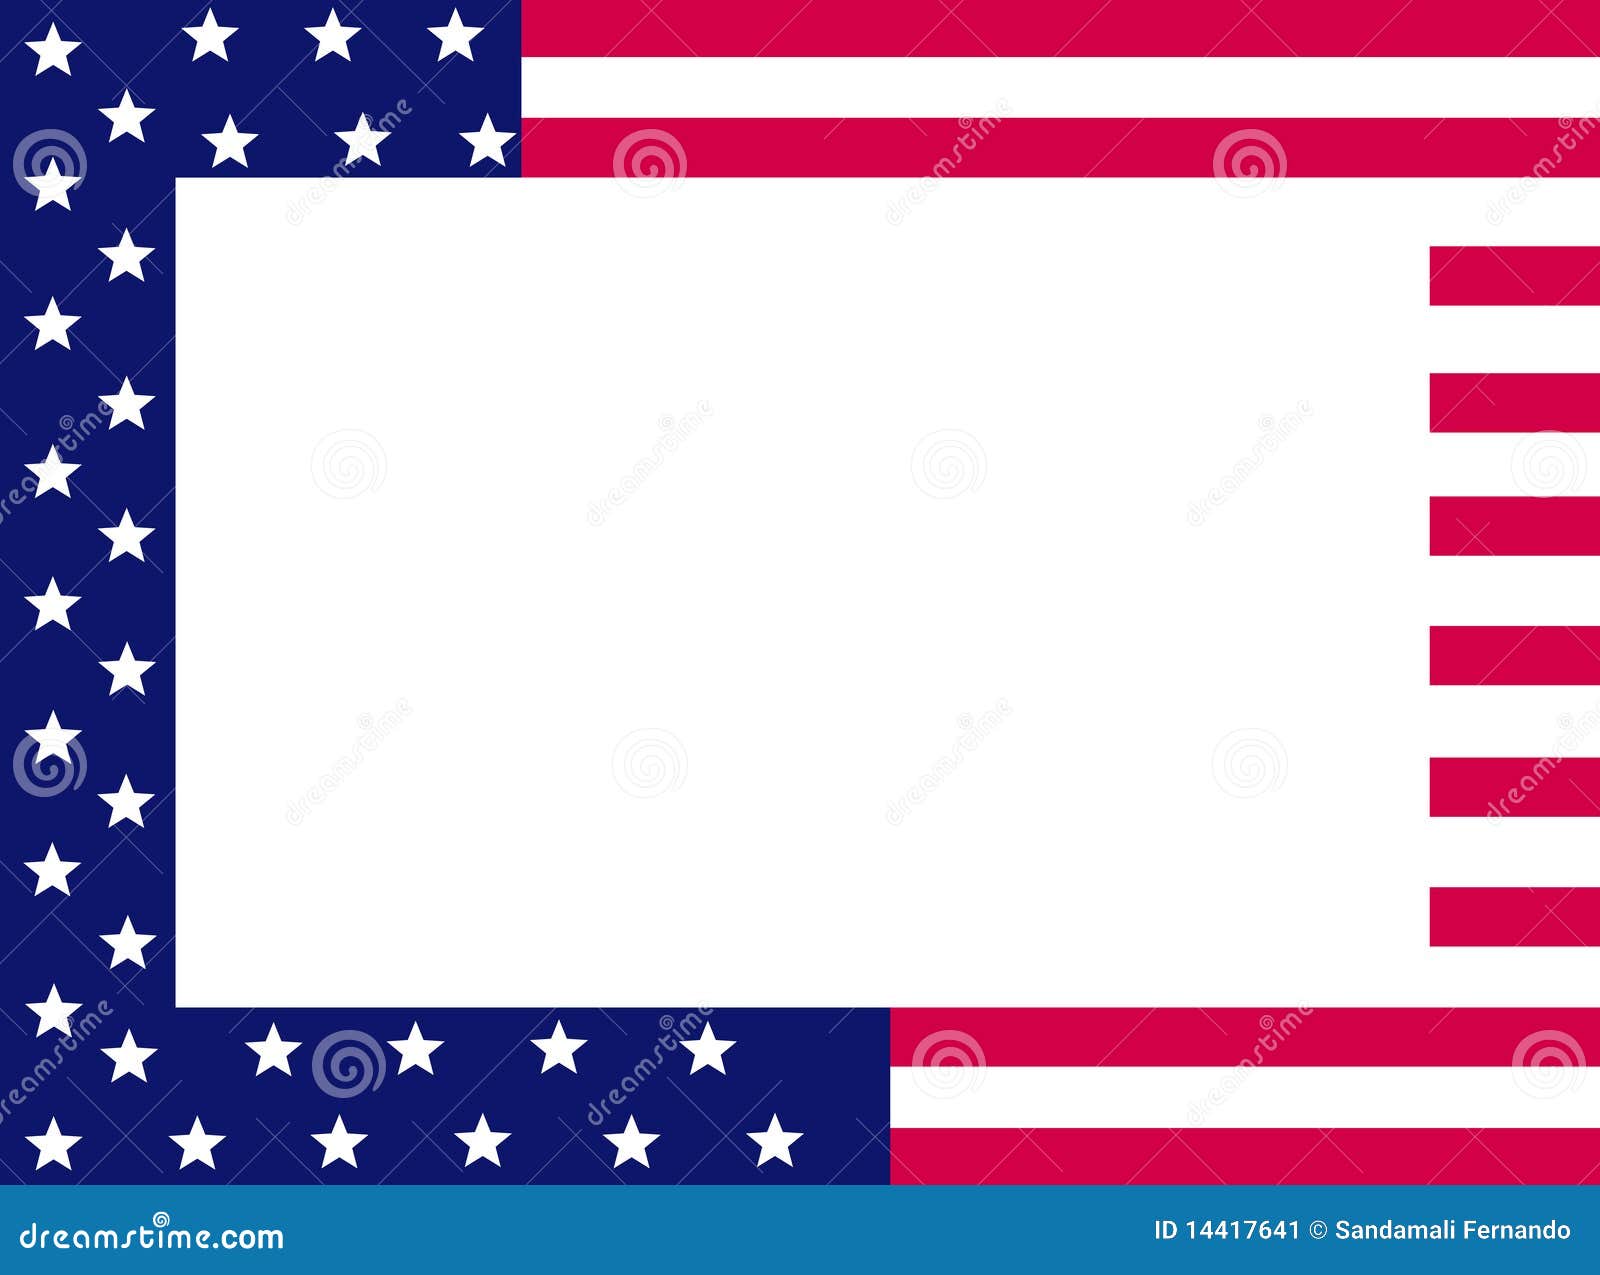 free patriotic frames clip art - photo #41